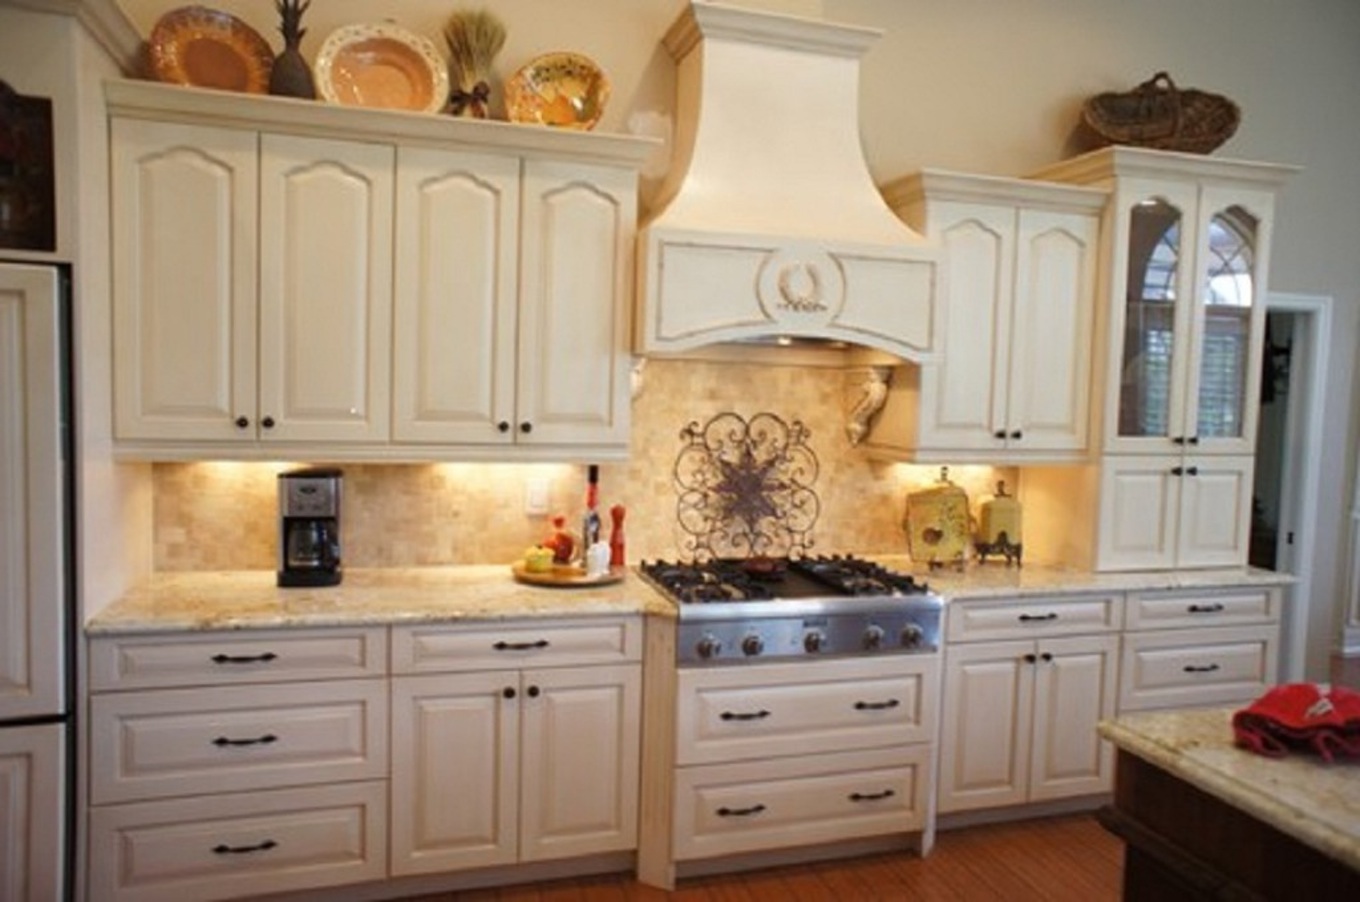 kitchen cabinets refinishing ideas photo - 10